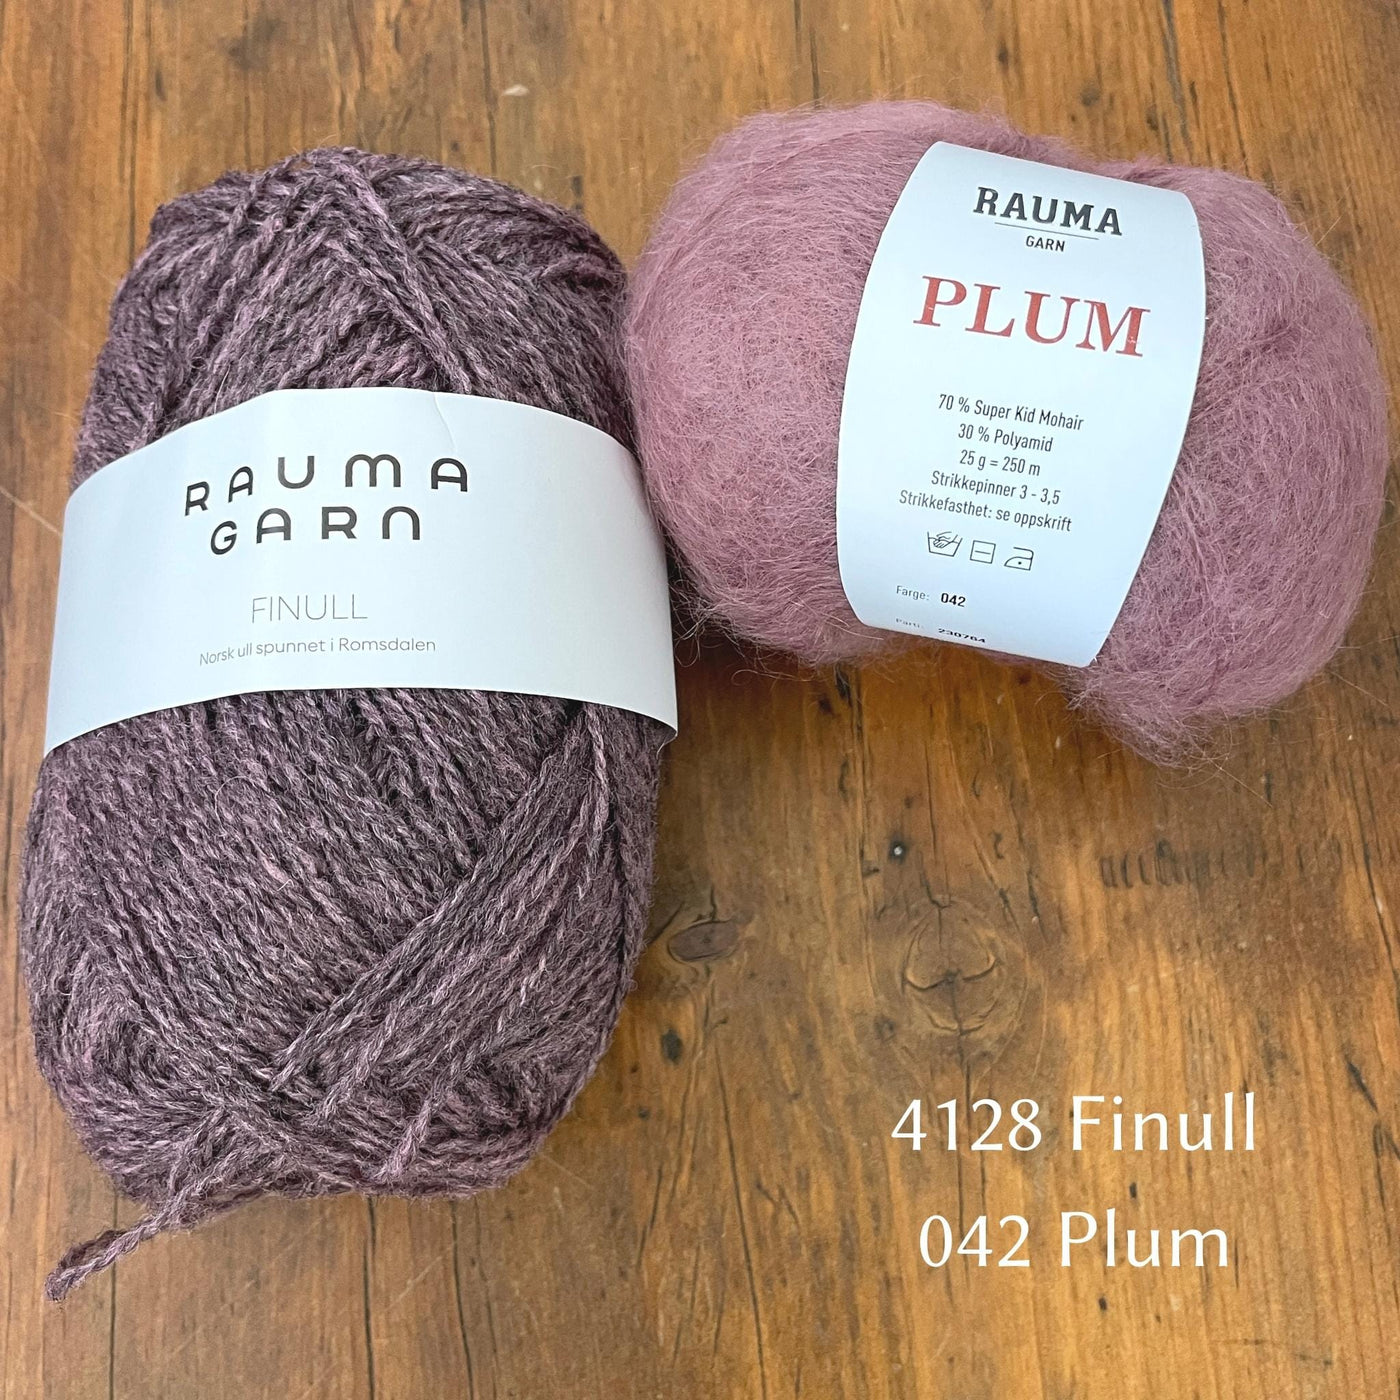 Ball of Rauma Finullgarn yarn in heathered mauve with coordinating Plum yarn 